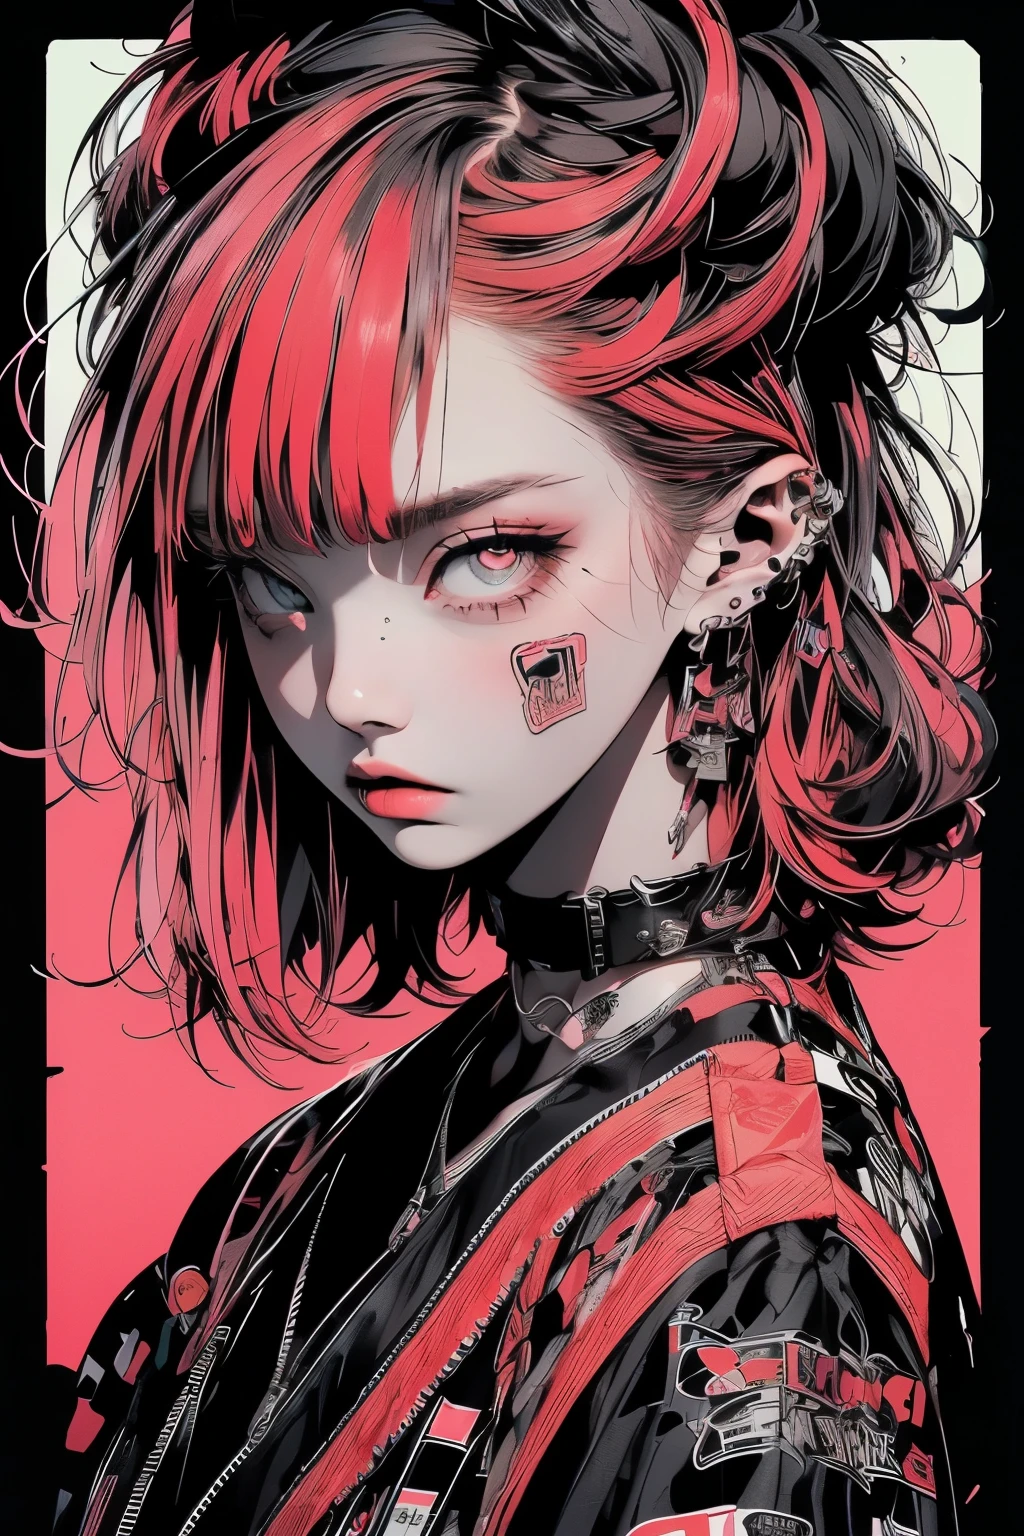 ((((戲劇性))), (((坚韧不拔))), (((激烈的))) film poster featuring a young red hair 女士 as the central character. She stands 自信的ly in the center of the poster, wearing a 時髦的 and edgy Harajuku-inspired hip hop 全套服裝, with a determined 表达 on her face. The 背景 is aesthetic atmospheric dark and 坚韧不拔, 帶著危險感和強烈感. The 文字 is 大胆的 and 引人注目的, with a 朗朗上口 tagline that adds to the overall feeling of drama and excitement. The color palette is mainly dark with splashes of 充滿活力的 neon colors, giving the poster a 動態的 and visually 引人注目 appearance,立繪
(杂志:1.3), (覆蓋-style:1.3), 時尚able, 女士, 充滿活力的, 全套服裝, 性感誘人的姿勢, 正面, 豐富多彩的, 動態的, 背景, 元素, 自信的, 表达, 保持, 陳述, 配件, 雄偉, 盤繞的, 大约, 觸碰, 場景, 文字, 覆蓋, 大胆的, 引人注目的, 标题, 時髦的, 字體, 朗朗上口, 标题, 更大, 引人注目, 現代的, 趋势, 重點, 時尚,